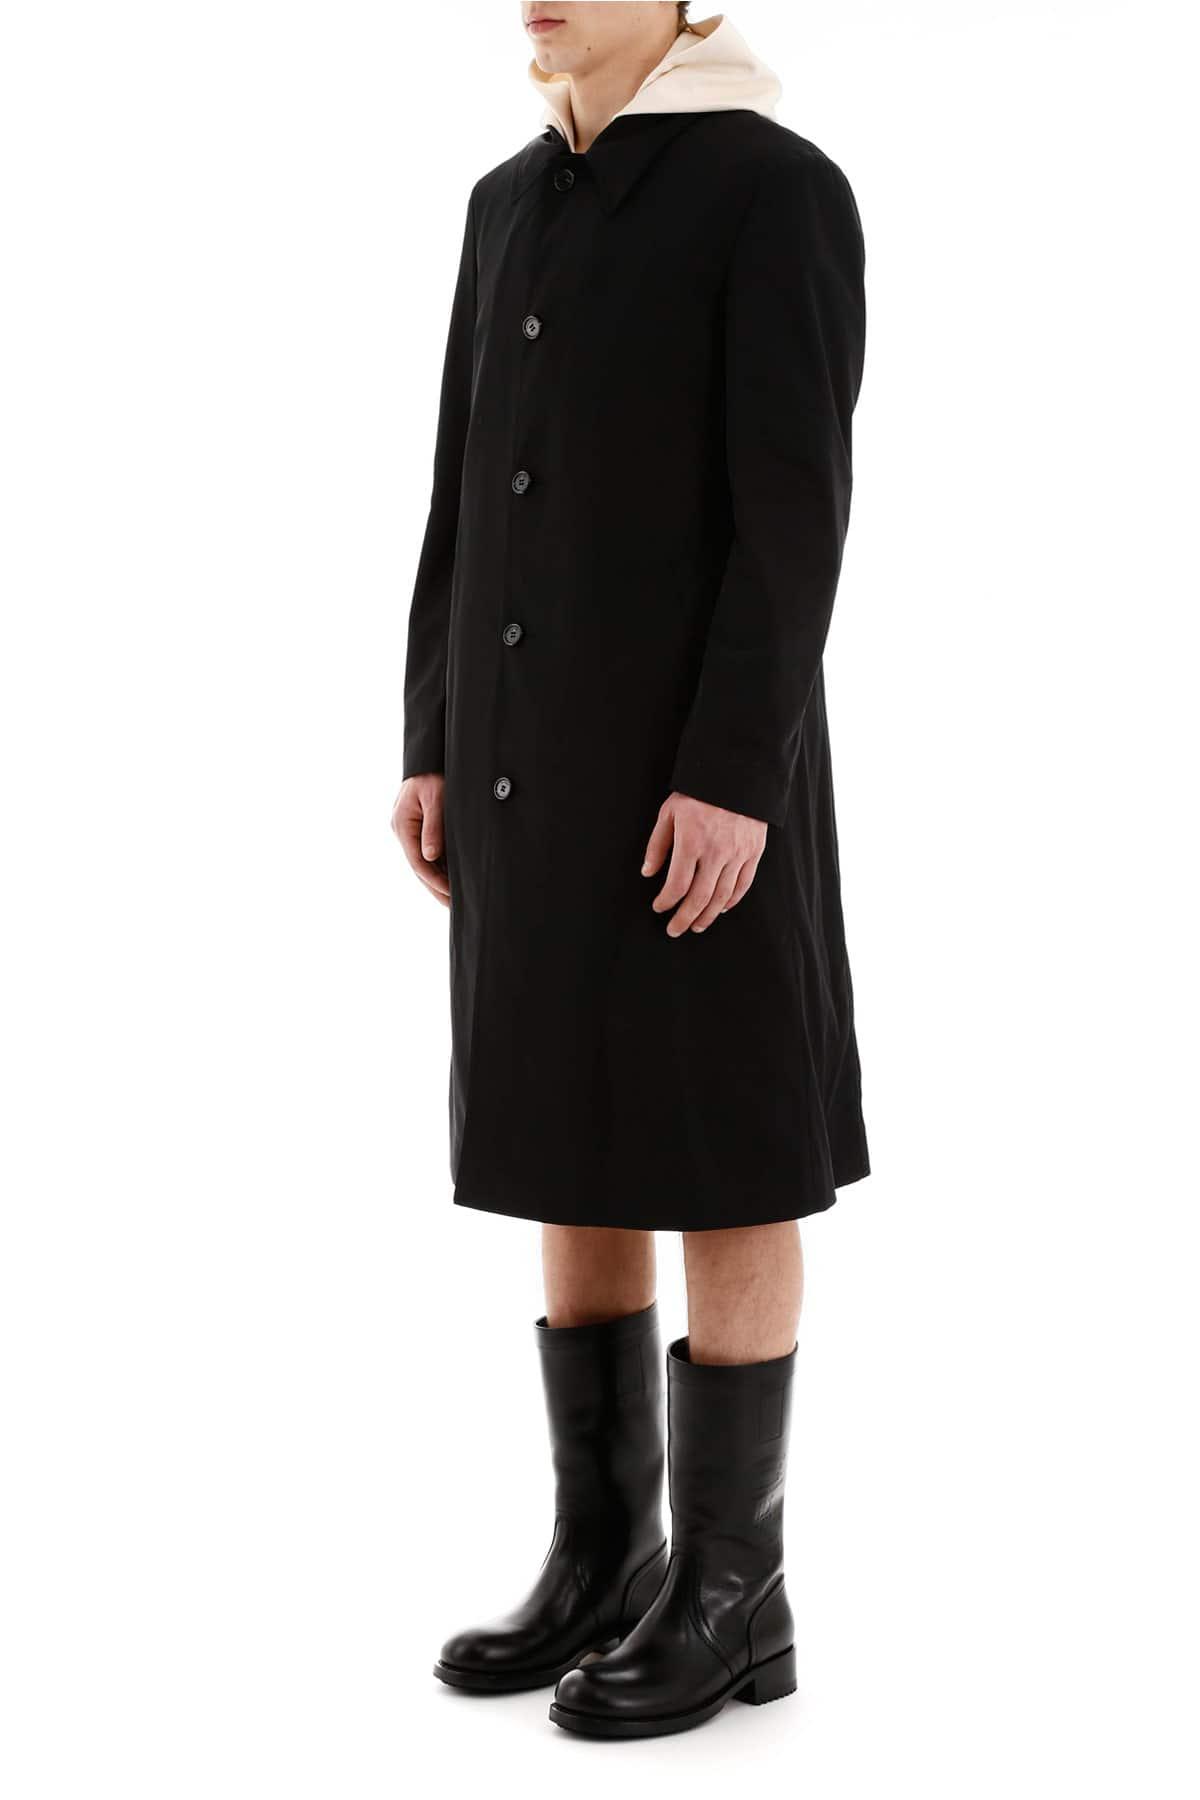 Raf Simons Cotton Car Coat Slim Fit Raincoat in Black for Men - Lyst